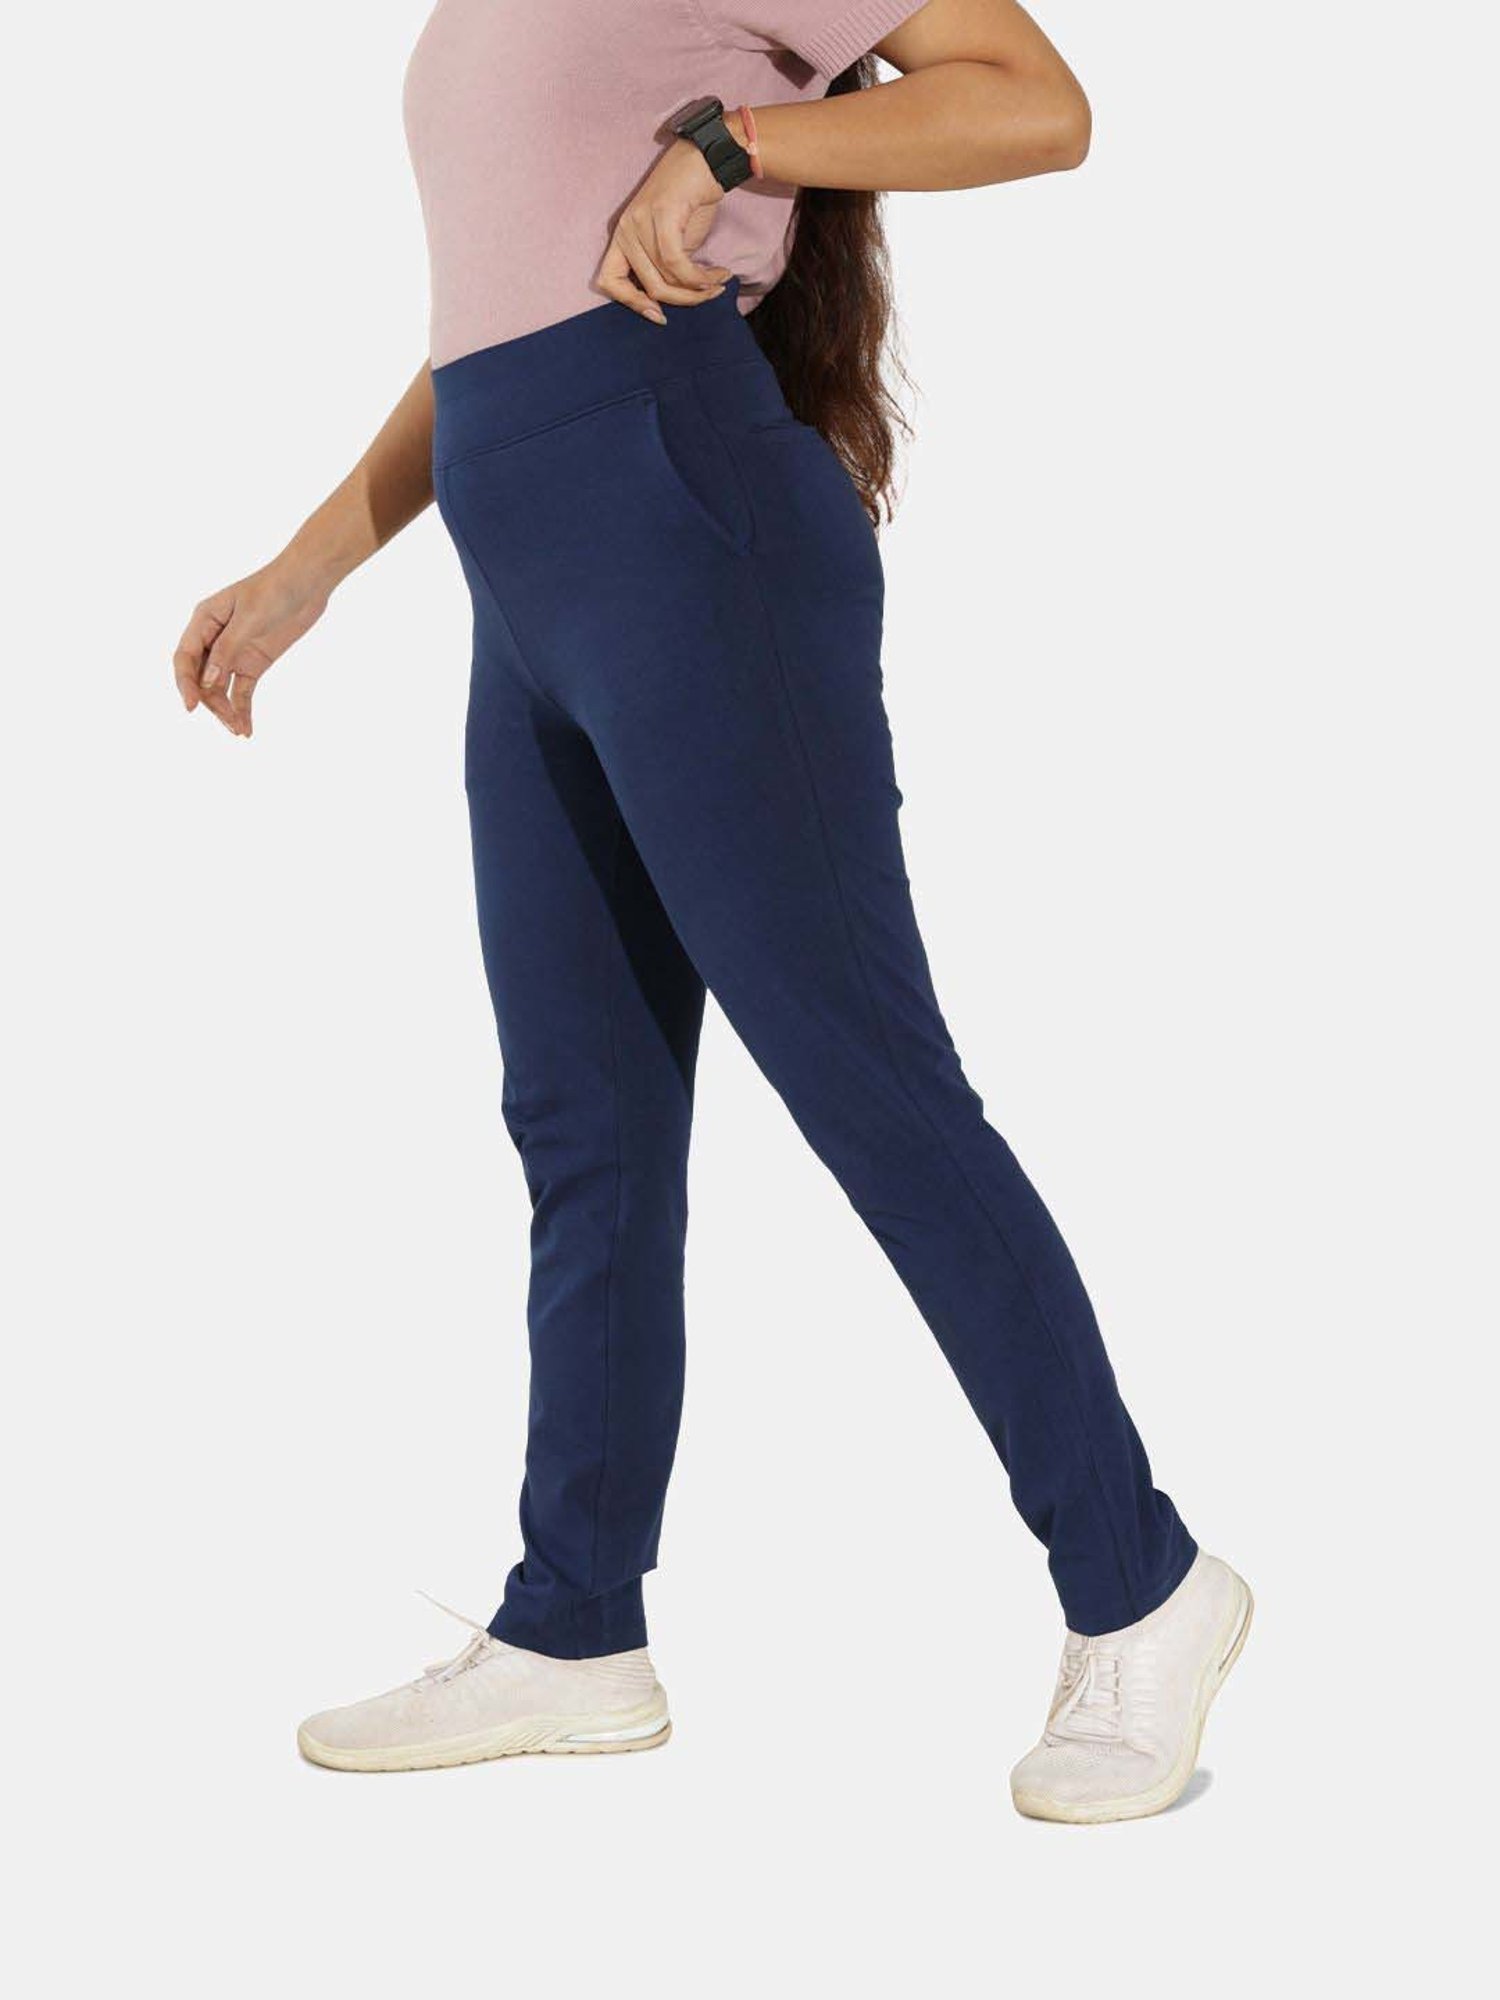 Jeans & Trousers, Blissclub Xxl Pant